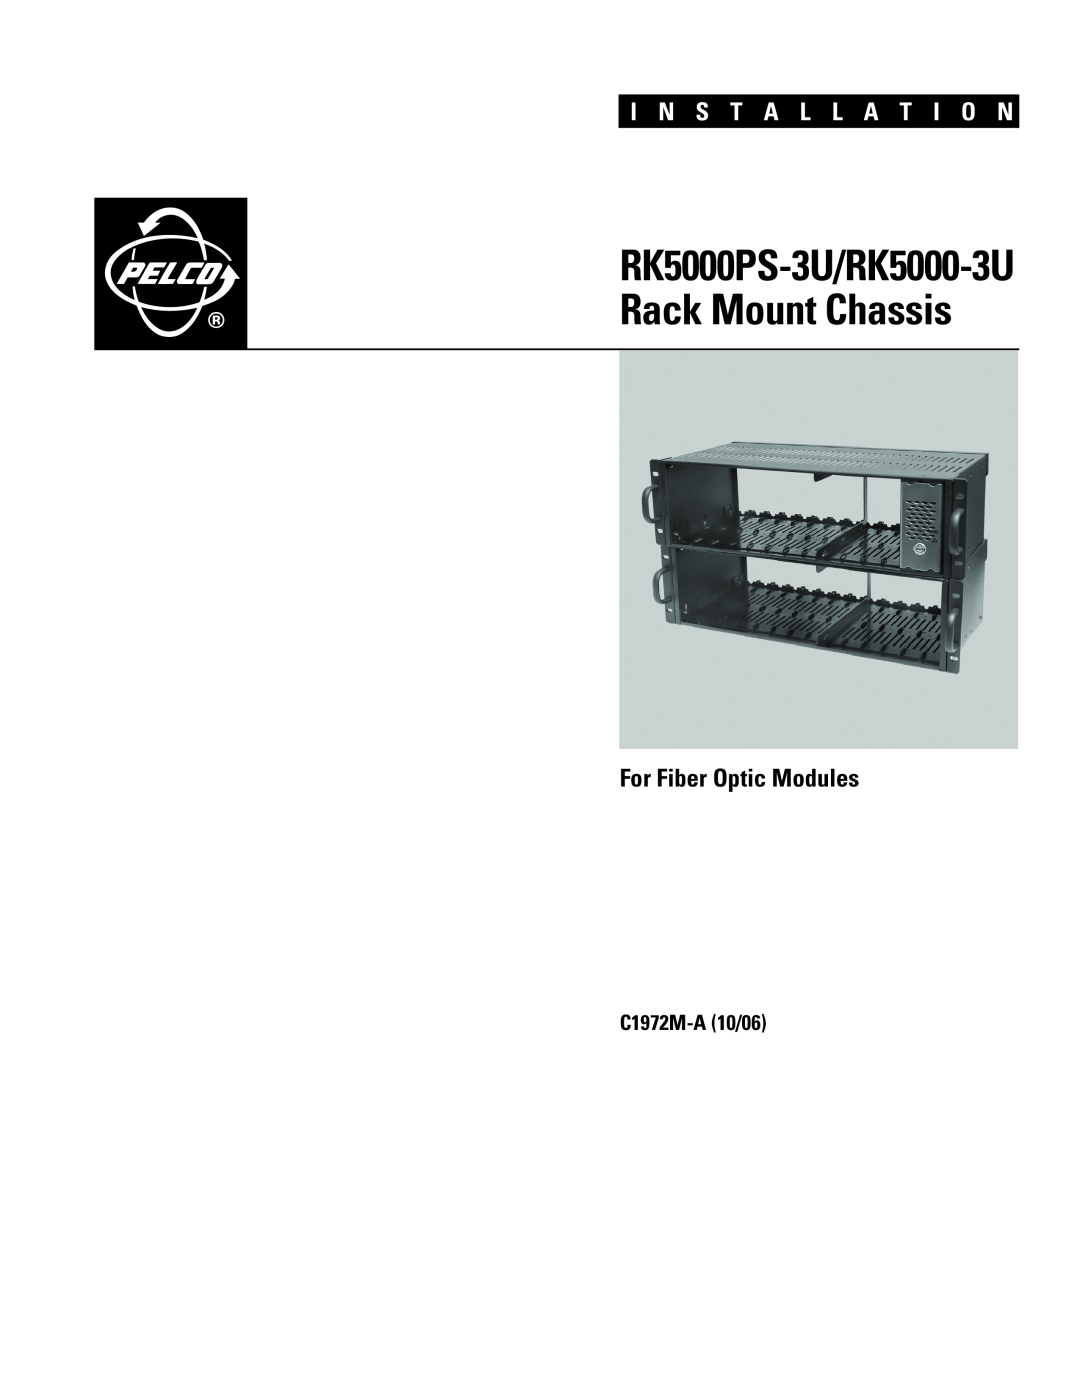 Pelco manual RK5000PS-3U/RK5000-3URack Mount Chassis, For Fiber Optic Modules, I N S T A L L A T I O N, C1972M-A10/06 